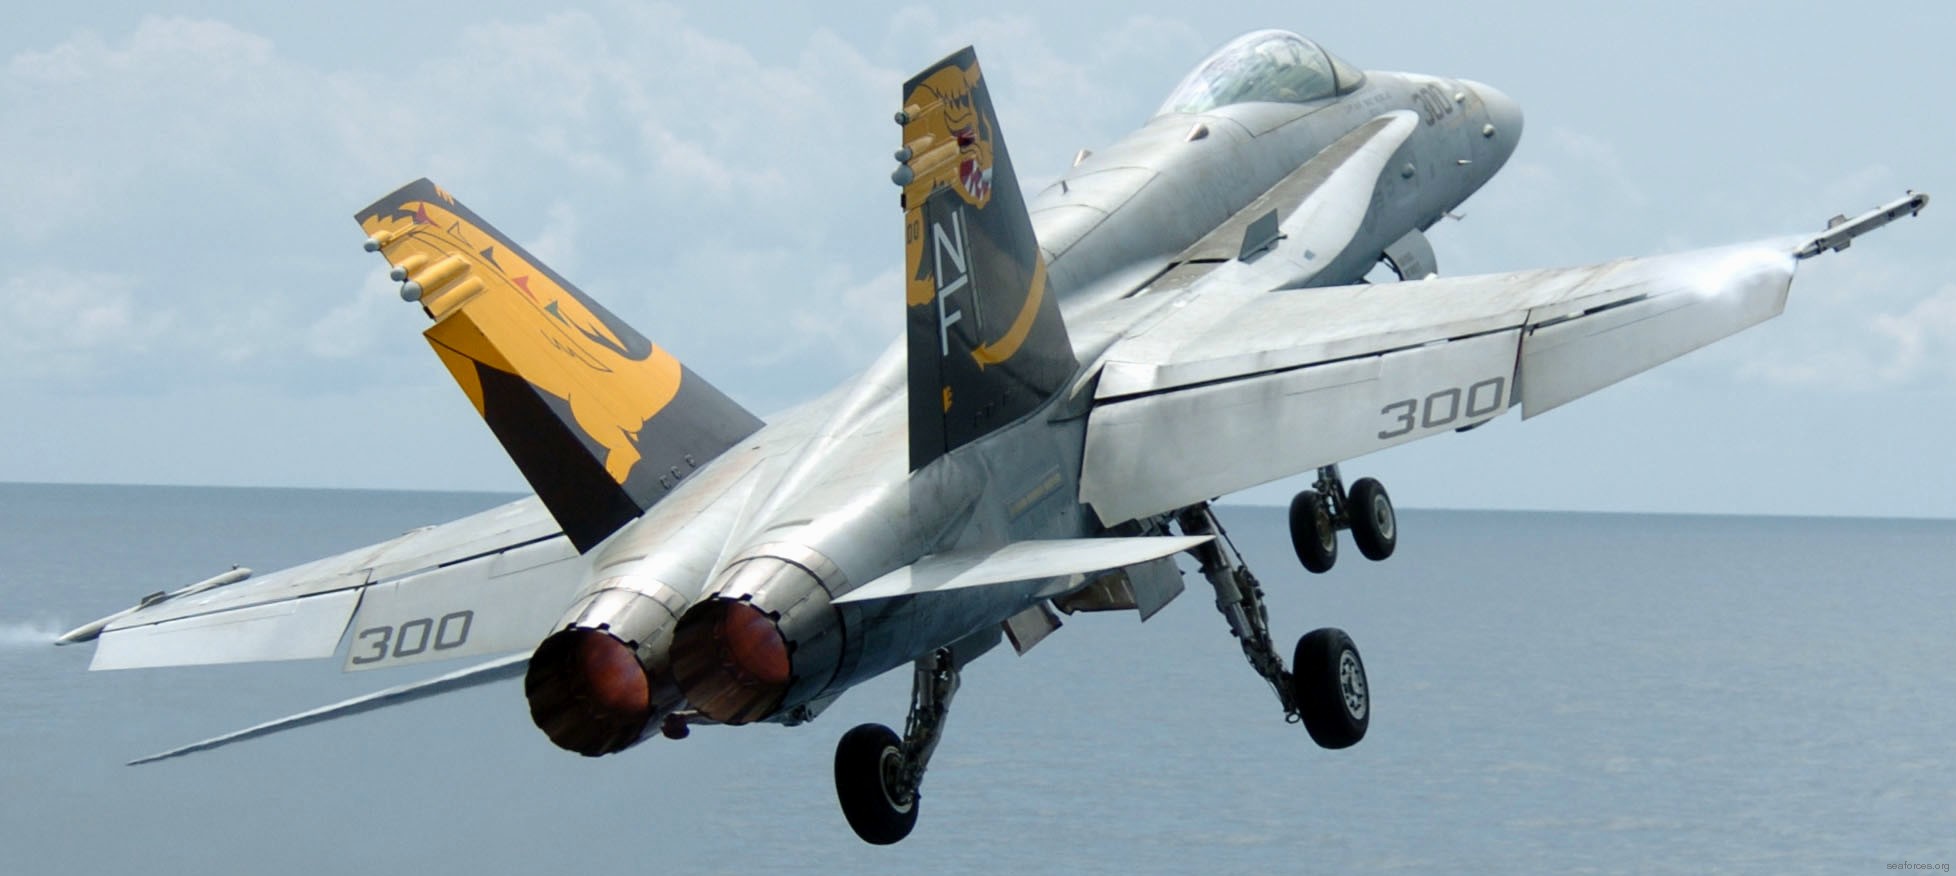 vfa-192 golden dragons strike fighter squadron navy f/a-18c hornet carrier air wing cvw-5 uss kitty hawk cv-63 67